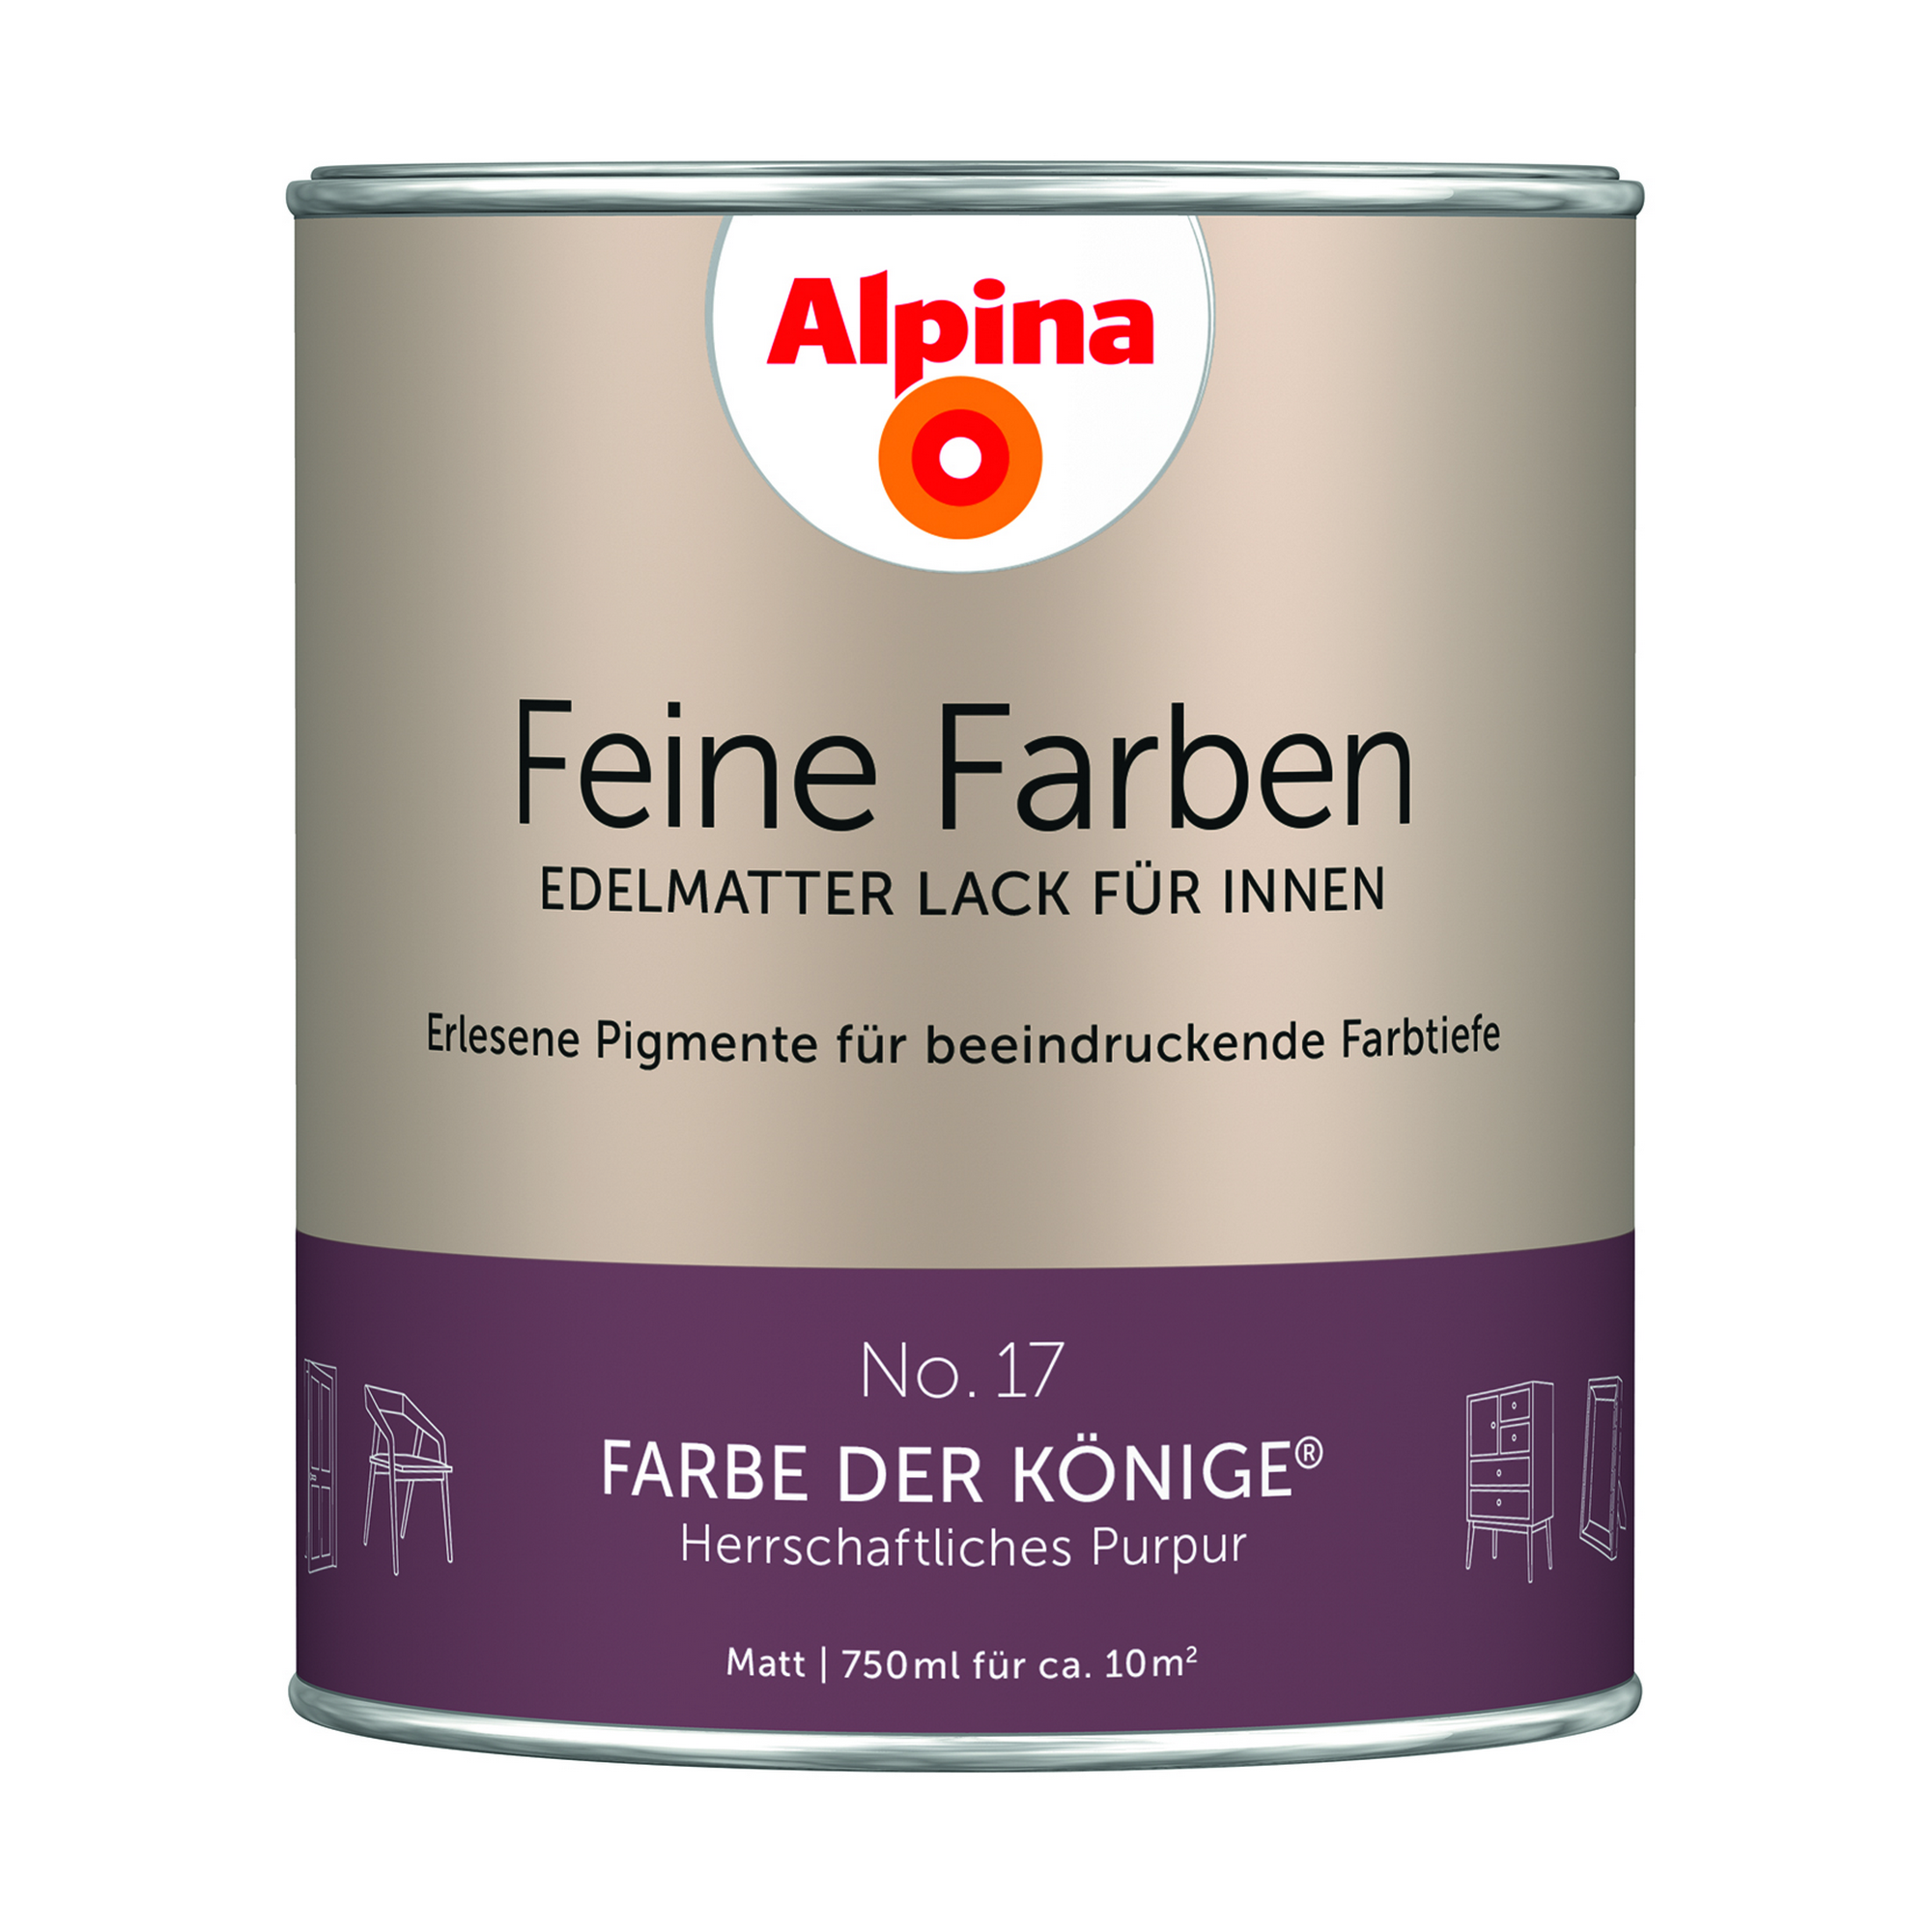 Feine Farben 'Farbe der Könige' purpurrot matt 750 ml + product picture